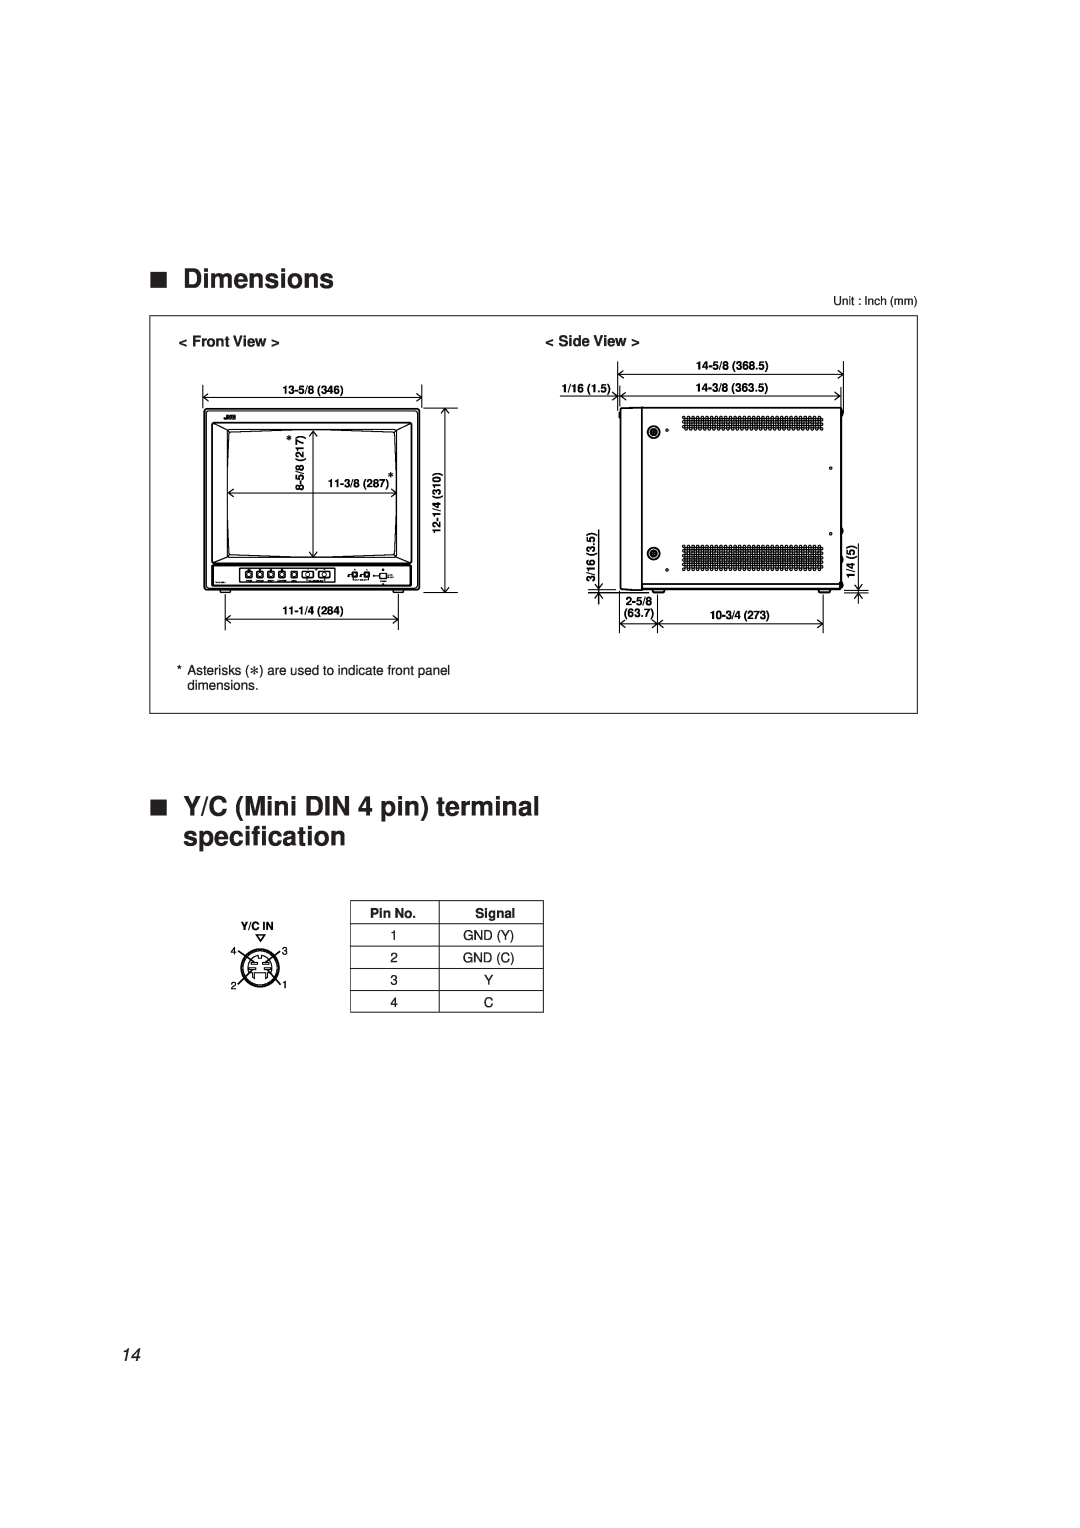 JVC TM-A130SU Dimensions, 7 Y/C Mini DIN 4 pin terminal specification, 13-5/8, 11-3/8, 11-1/4, 14-5/8, 1/16, 14-3/8, 2-5/8 